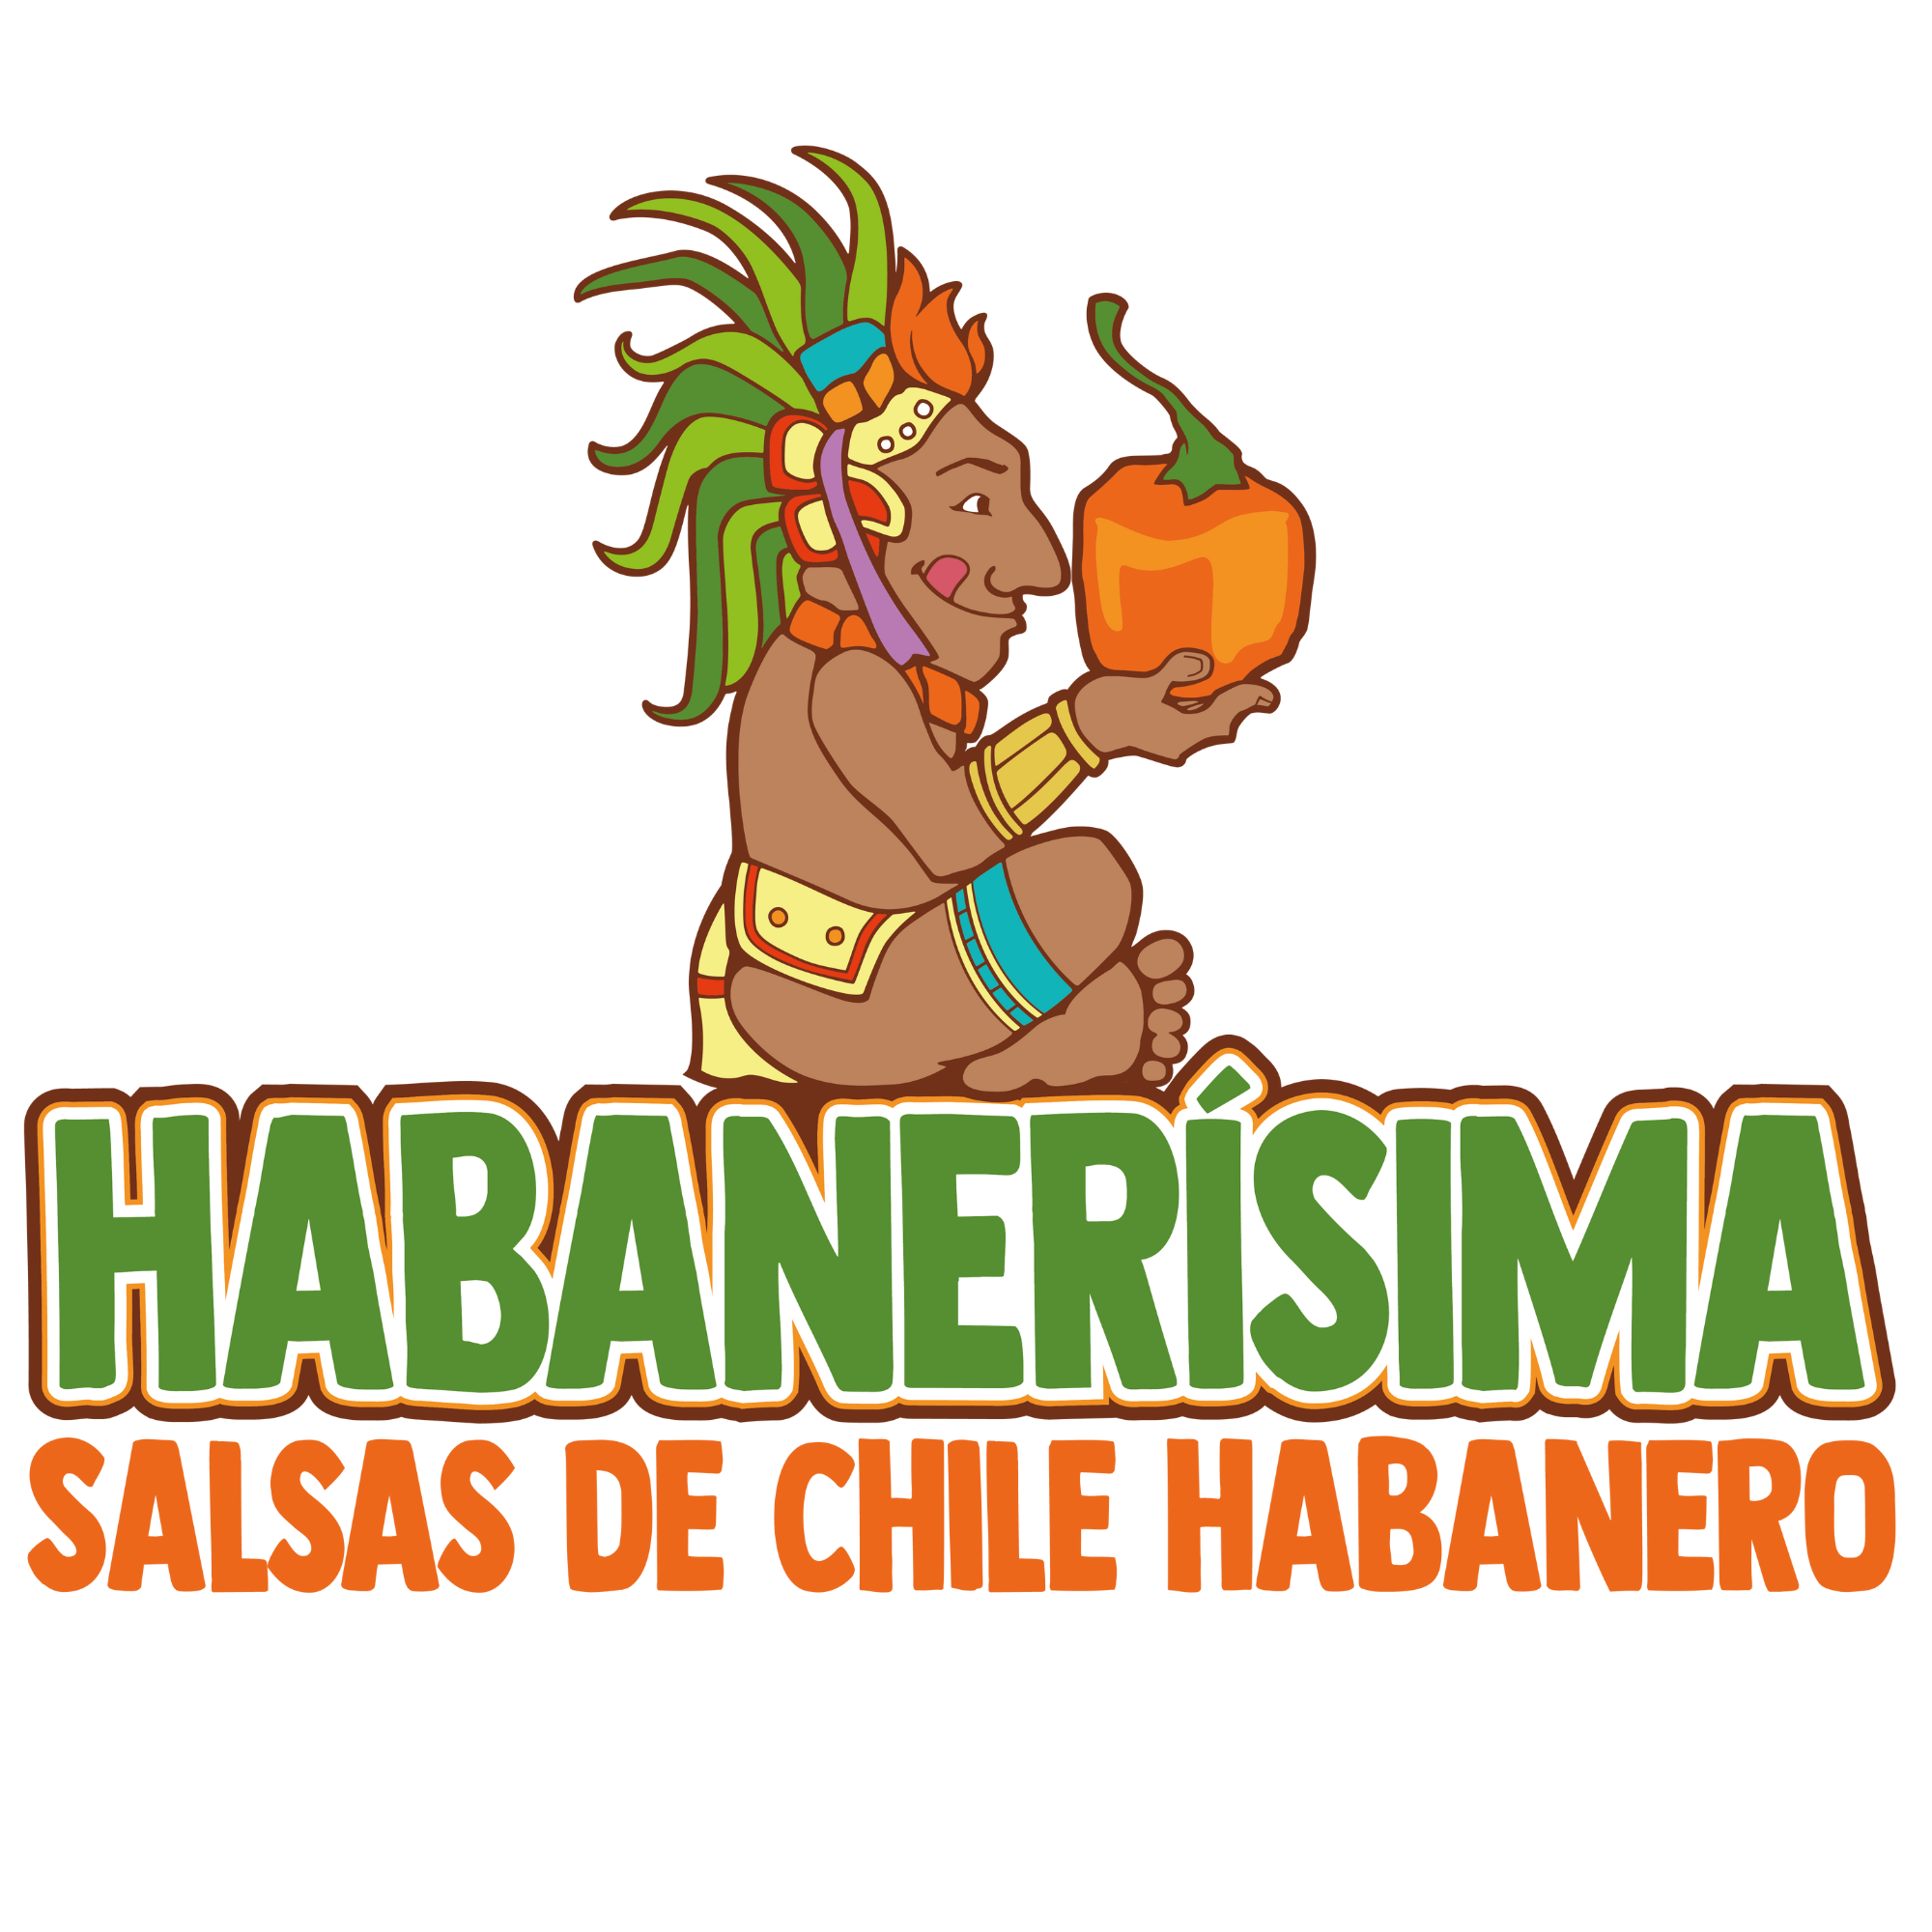 1 Pza de Salsa De Chile Habanero Habanerísima Asada De 1 Lt